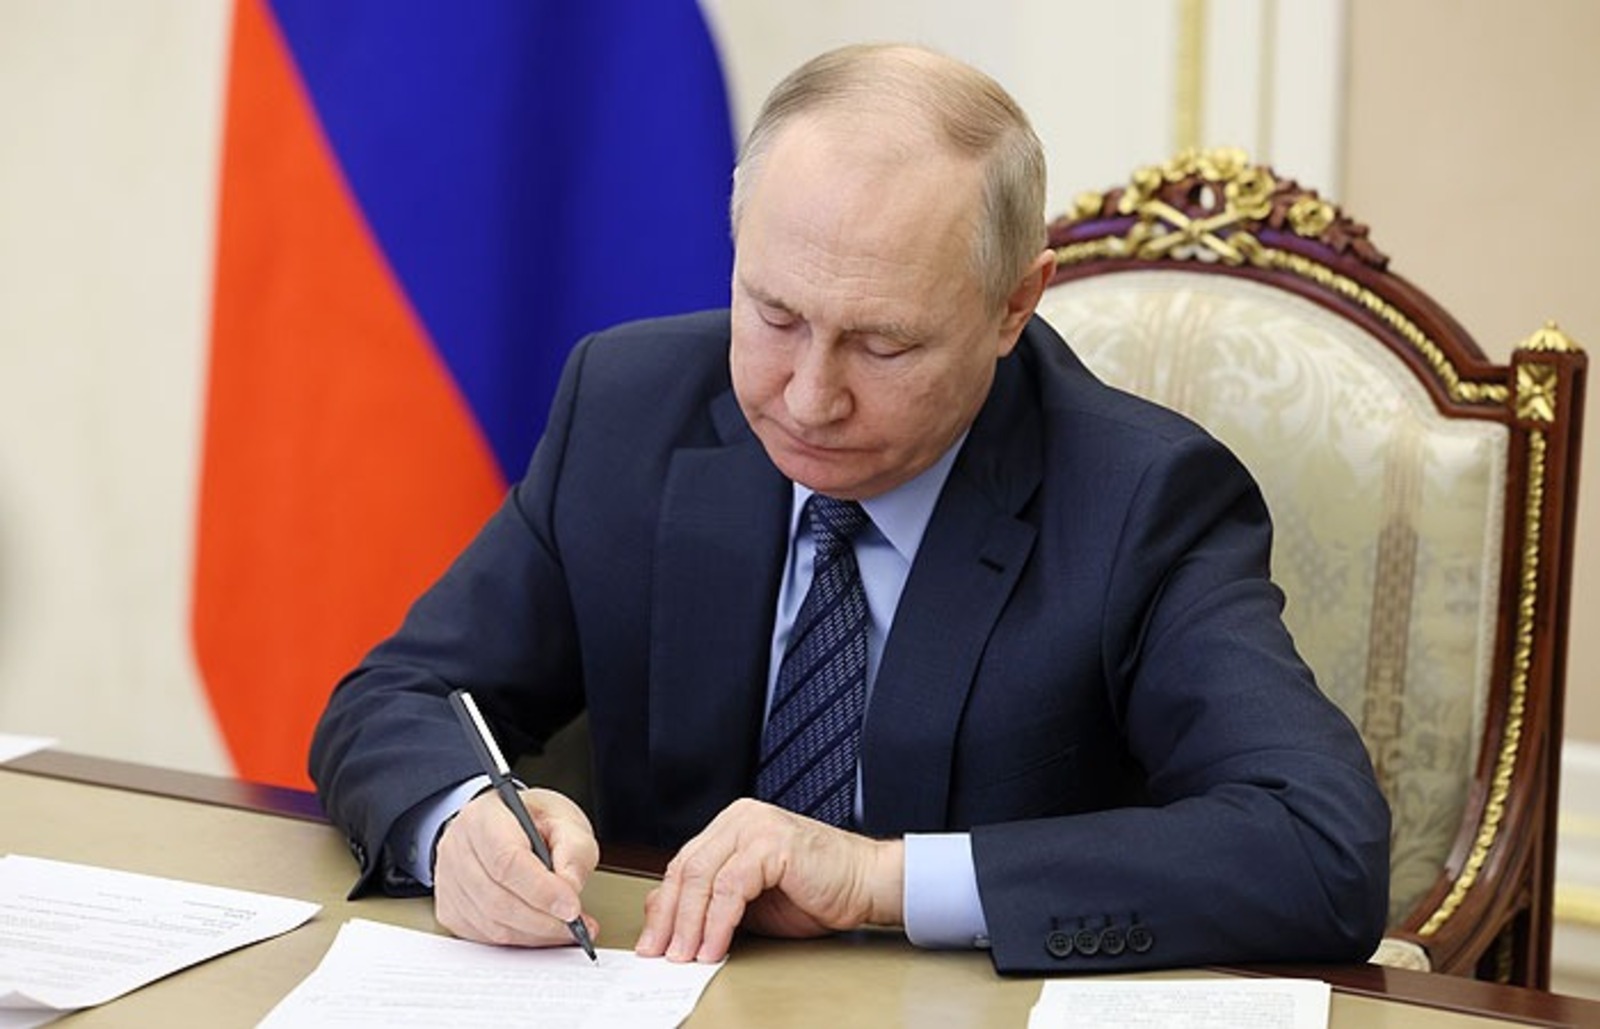 Участники СВО одобряют выдвижение Путина на пост президента